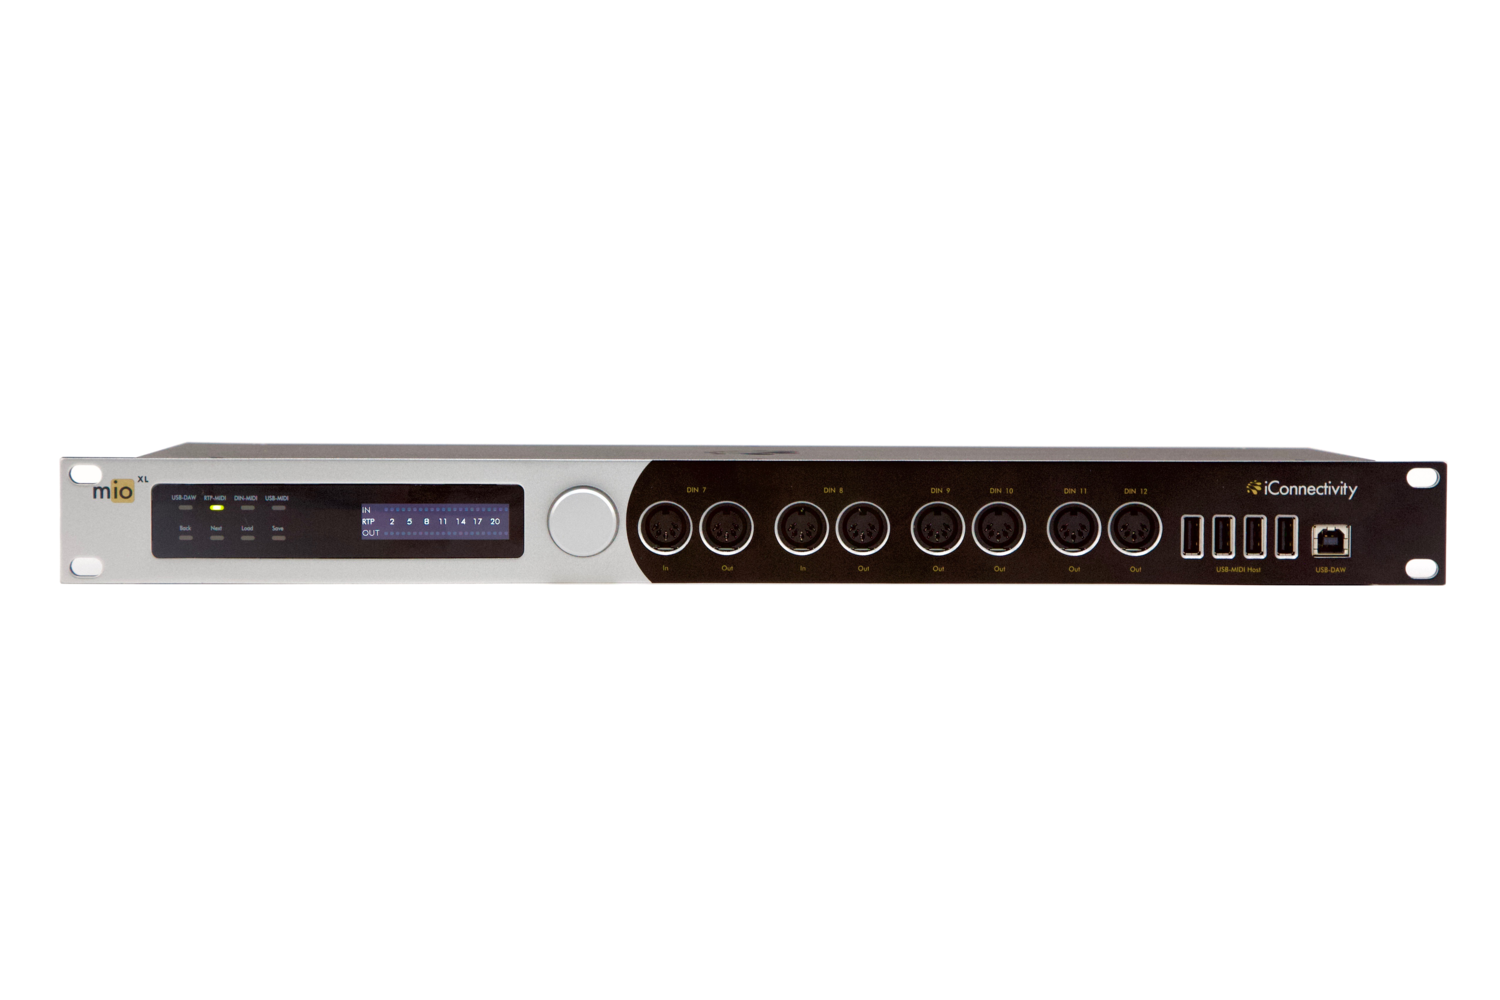 iConnectivity mioXC 1x1 USB-C MIDI Interface